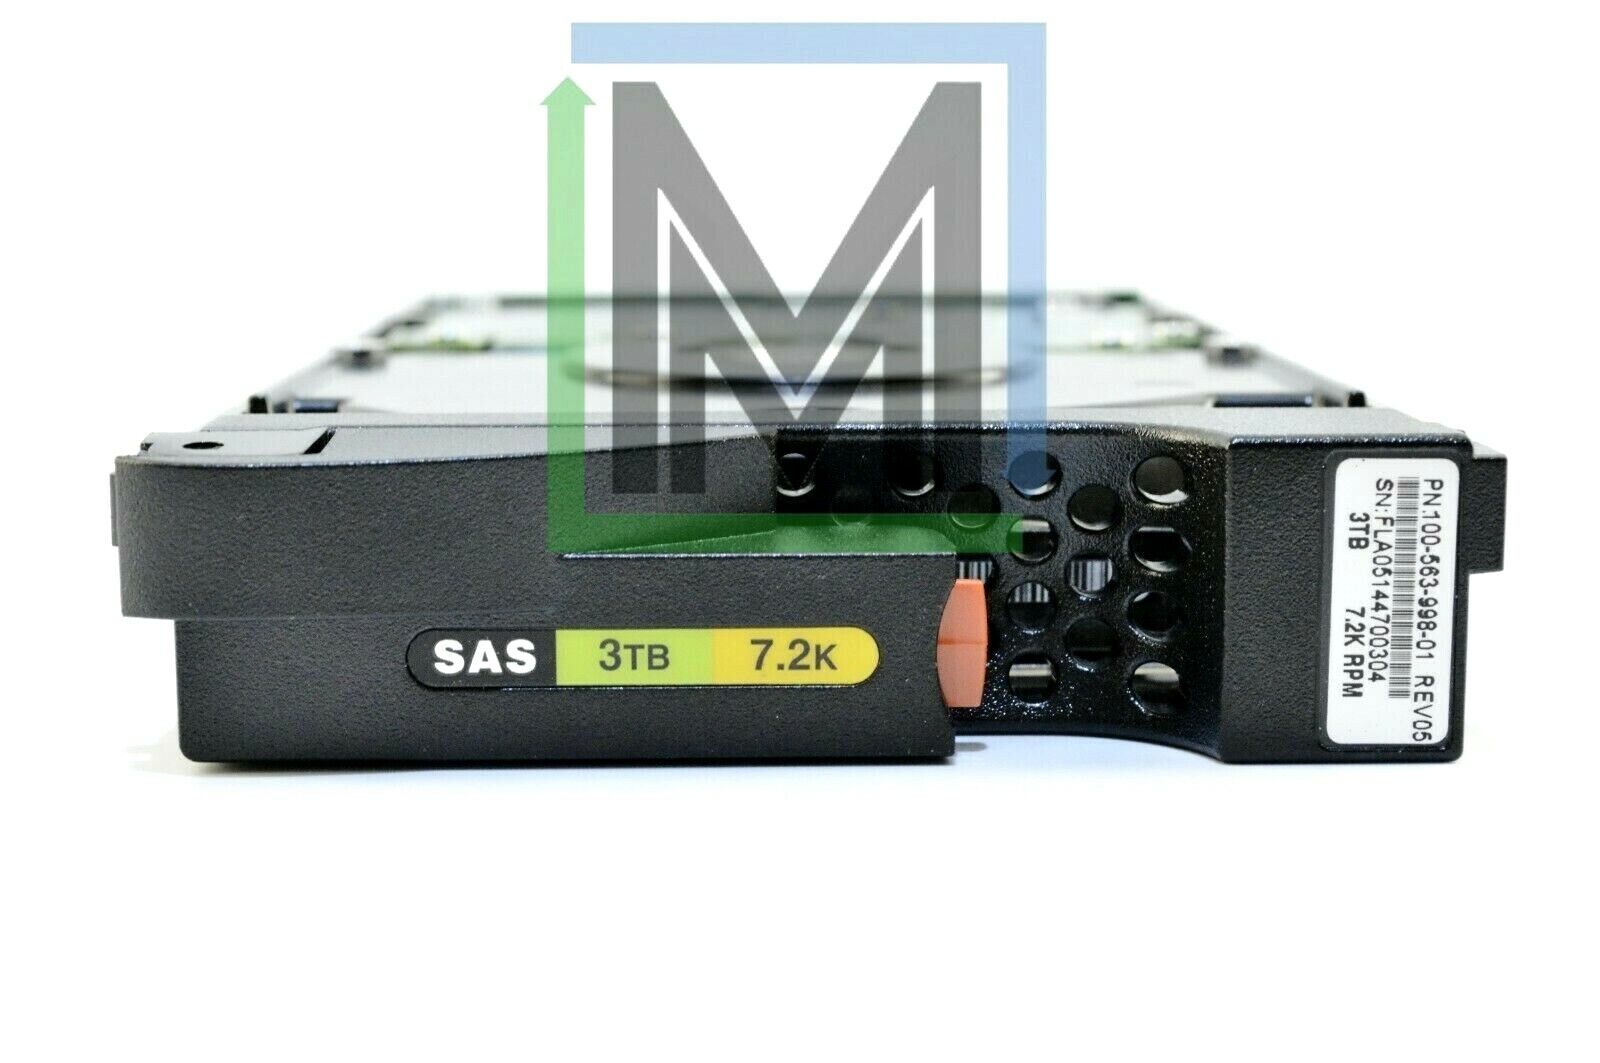 HUS724030ALS640 100-563-998-01 118033268-03 EMC HGST 3TB 3.5 SAS 7.2K 6Gb/s HDD